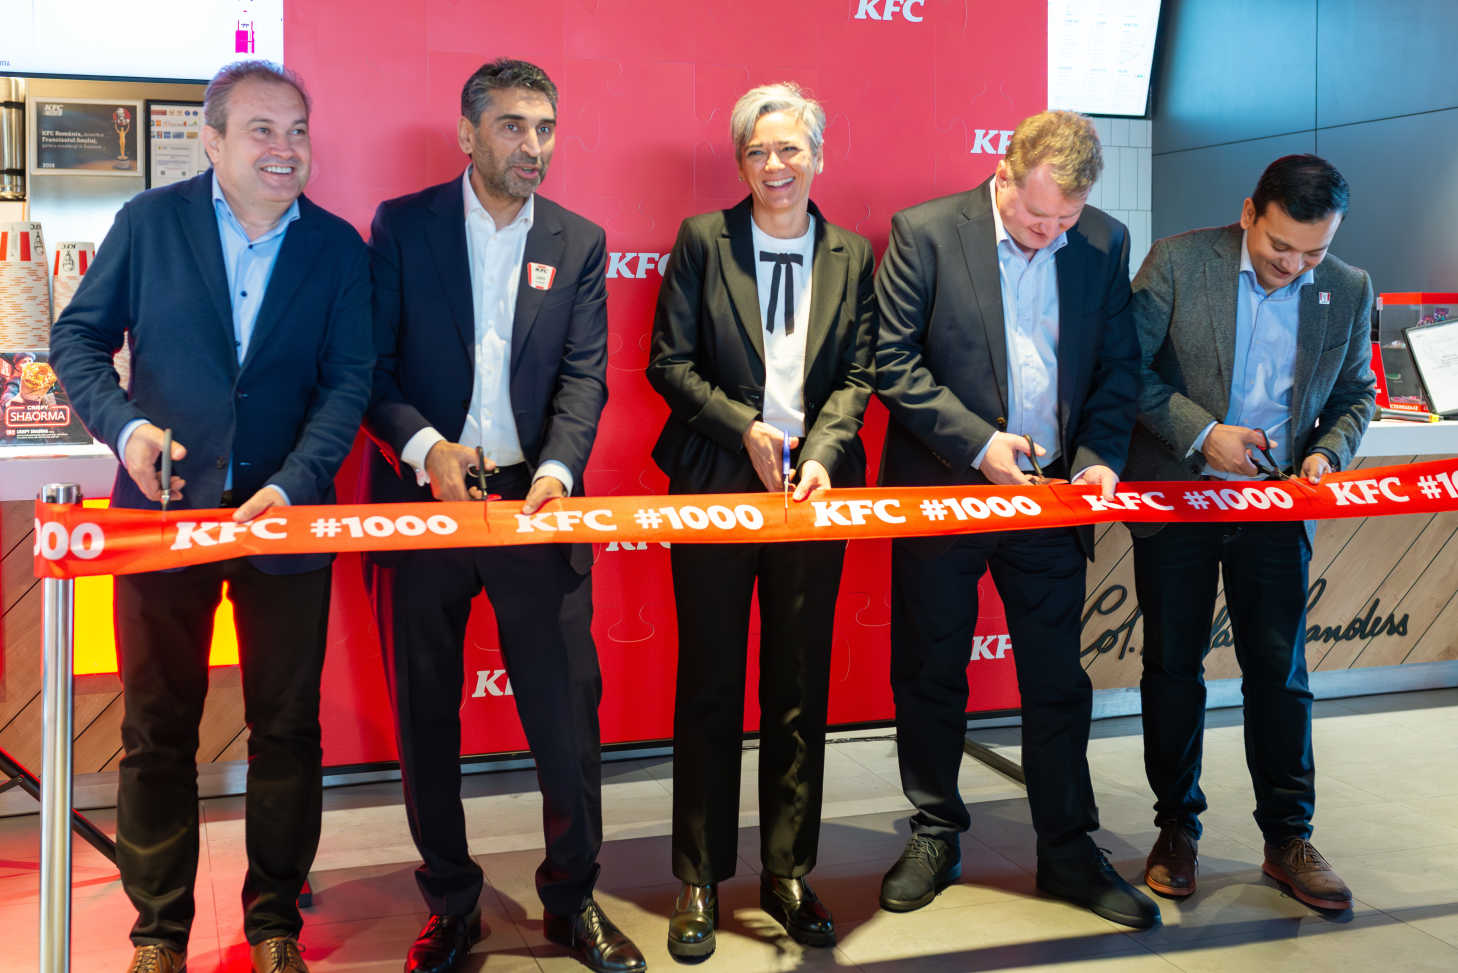 KFC’s Celebrates Global Growth with Major Milestone Restaurant Openings  